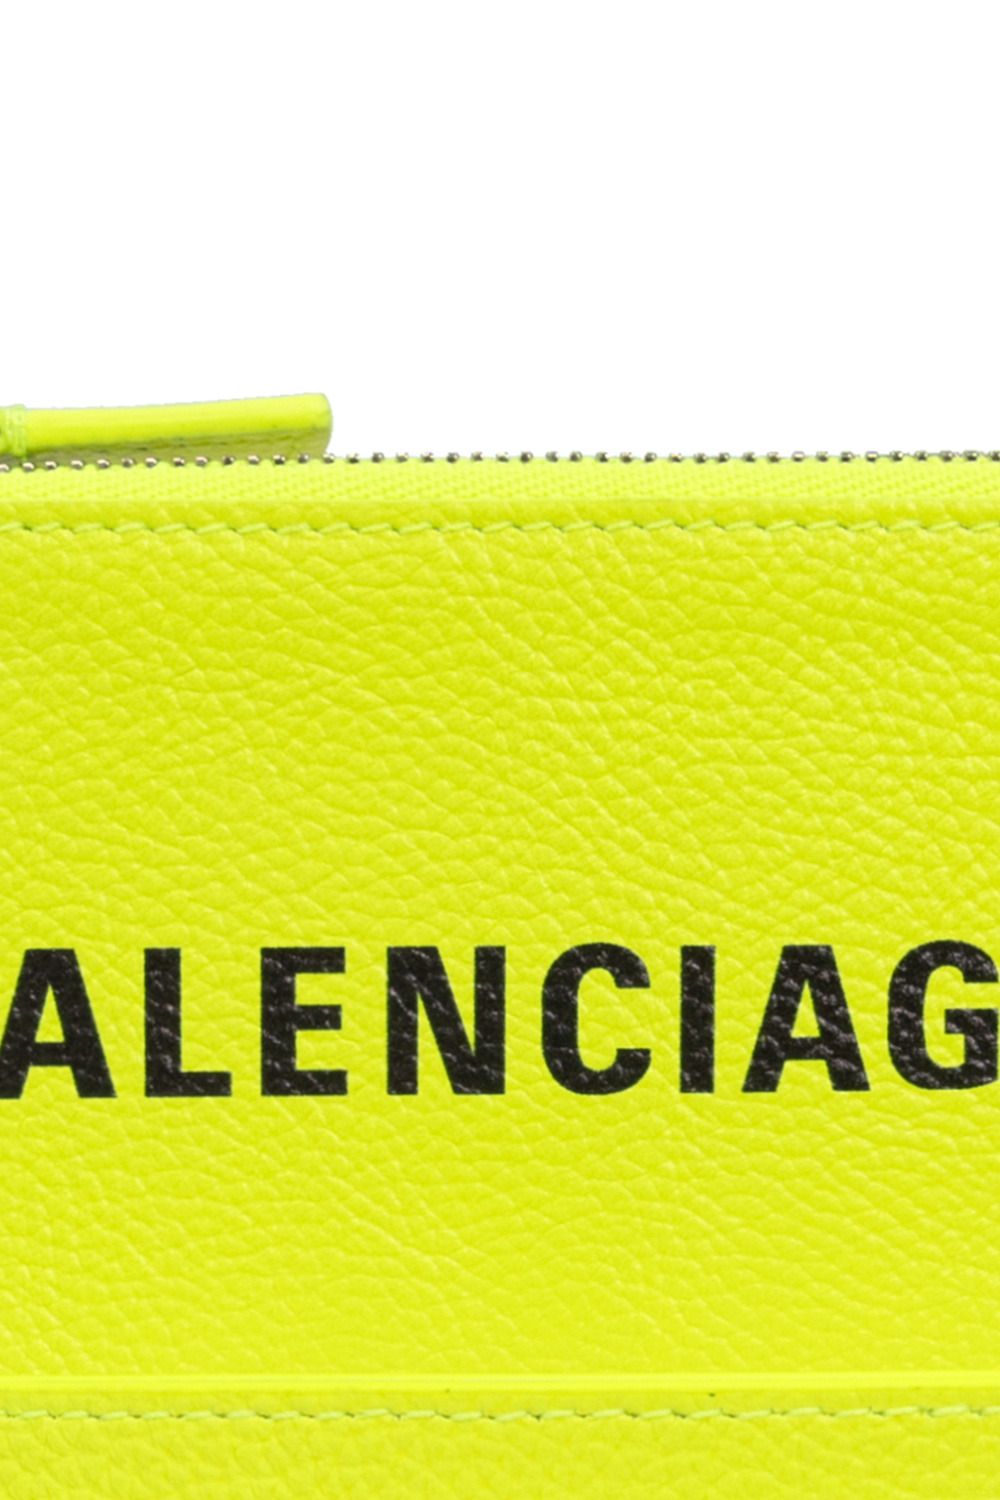 Balenciaga Discover our suggestions